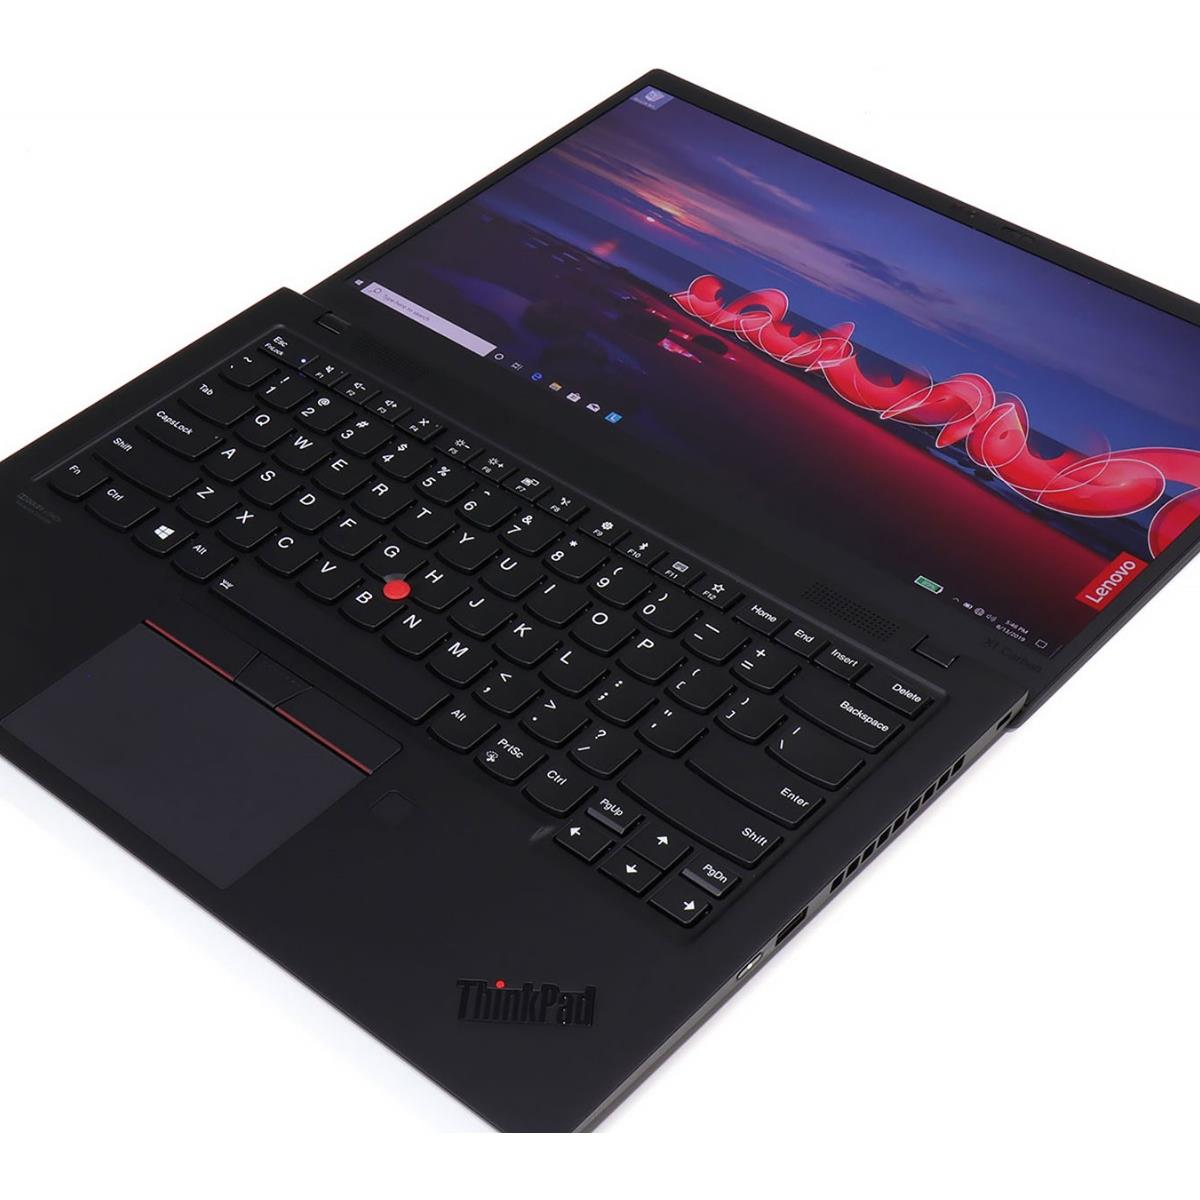 Lenovo ThinkPad X1 Carbon Review: Lenovo's 7th Gen Flagship